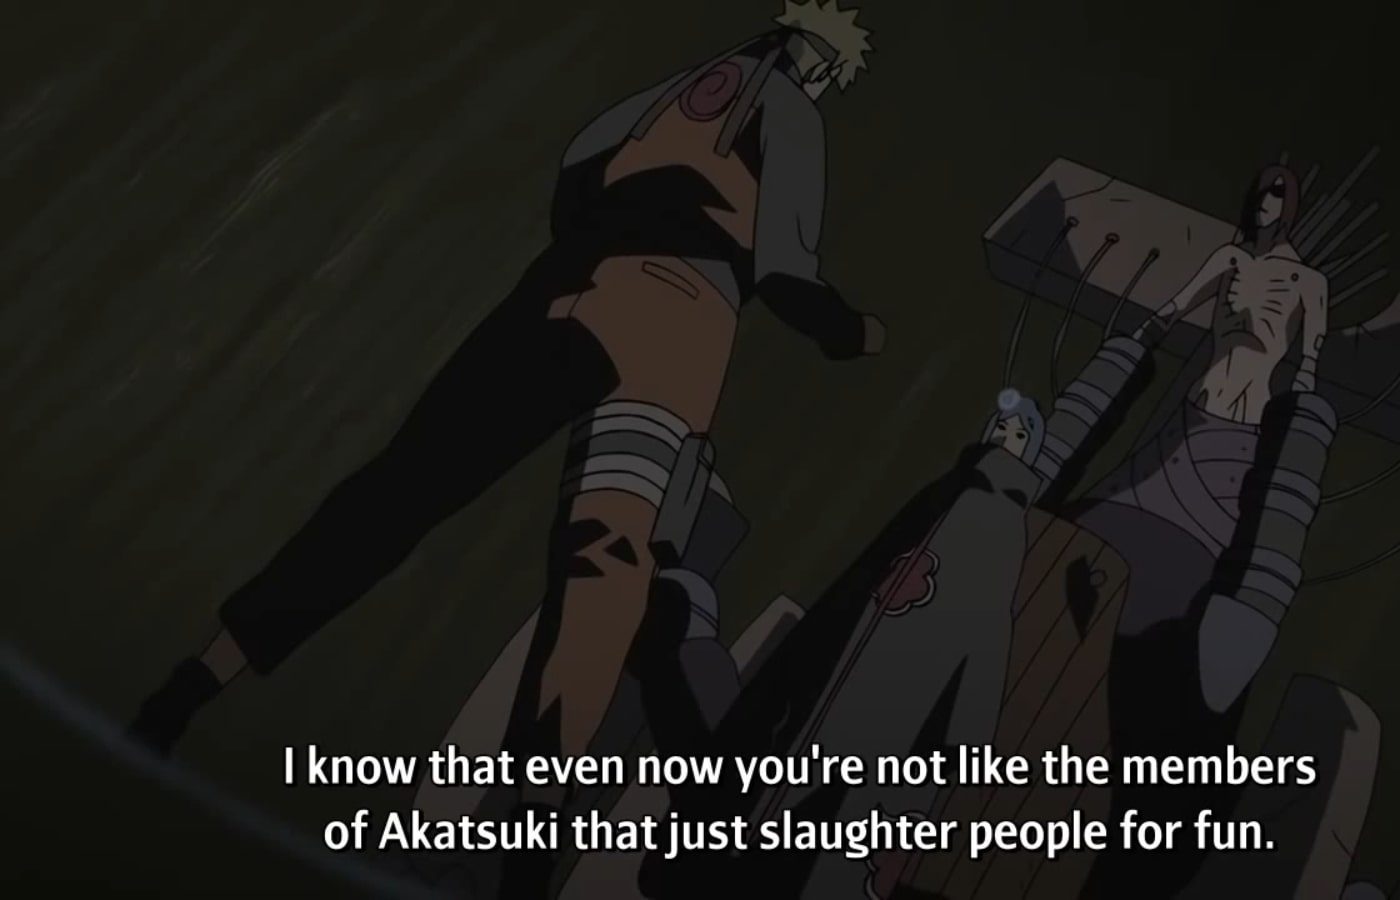 Naruto confronts Pain